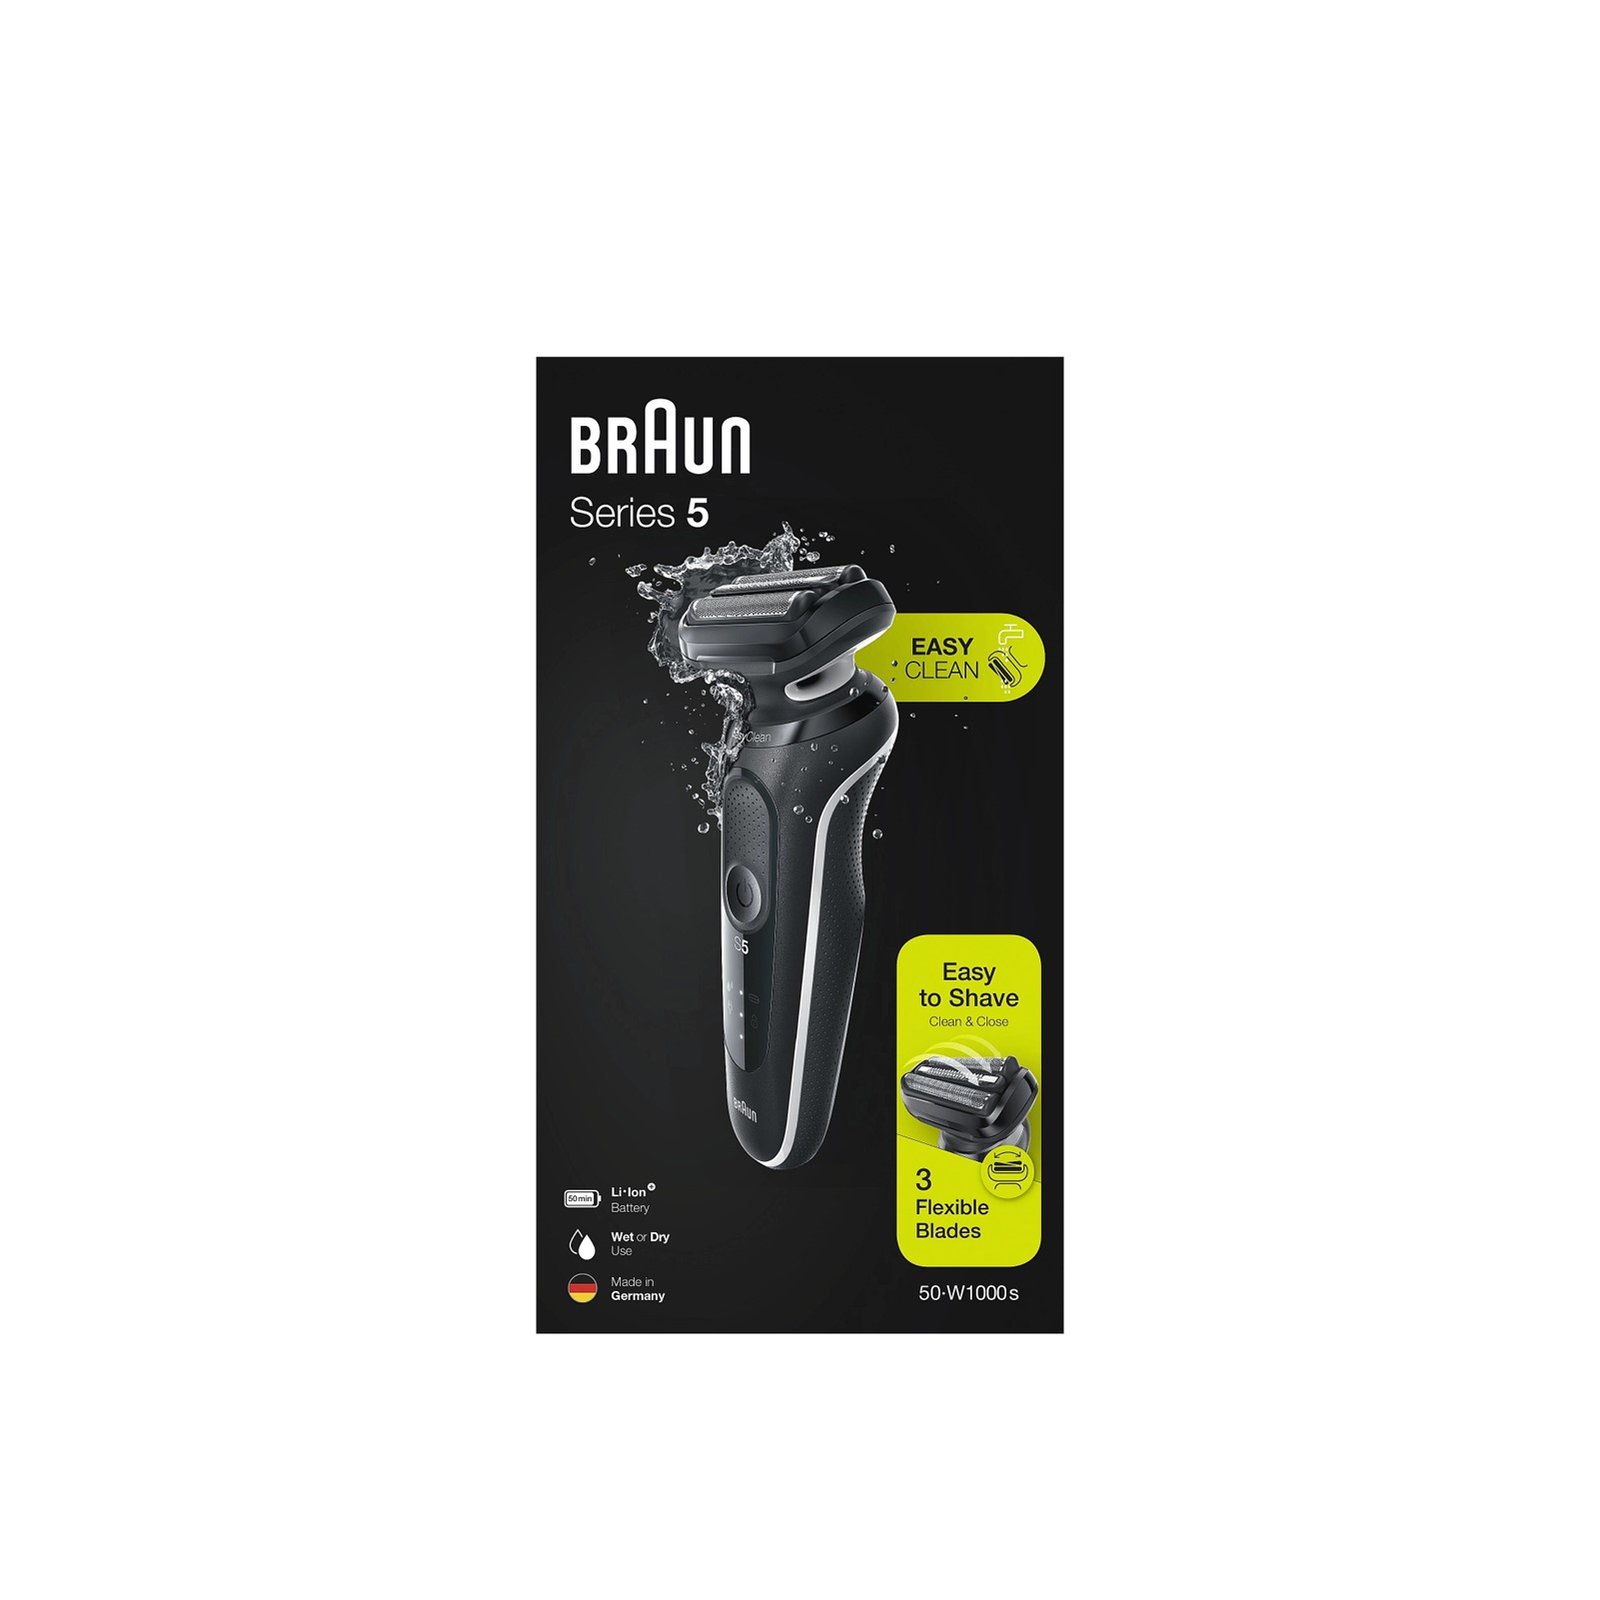 Buy Braun Series 5 EasyClean Electric Shaver 51 W1000 S · Germany